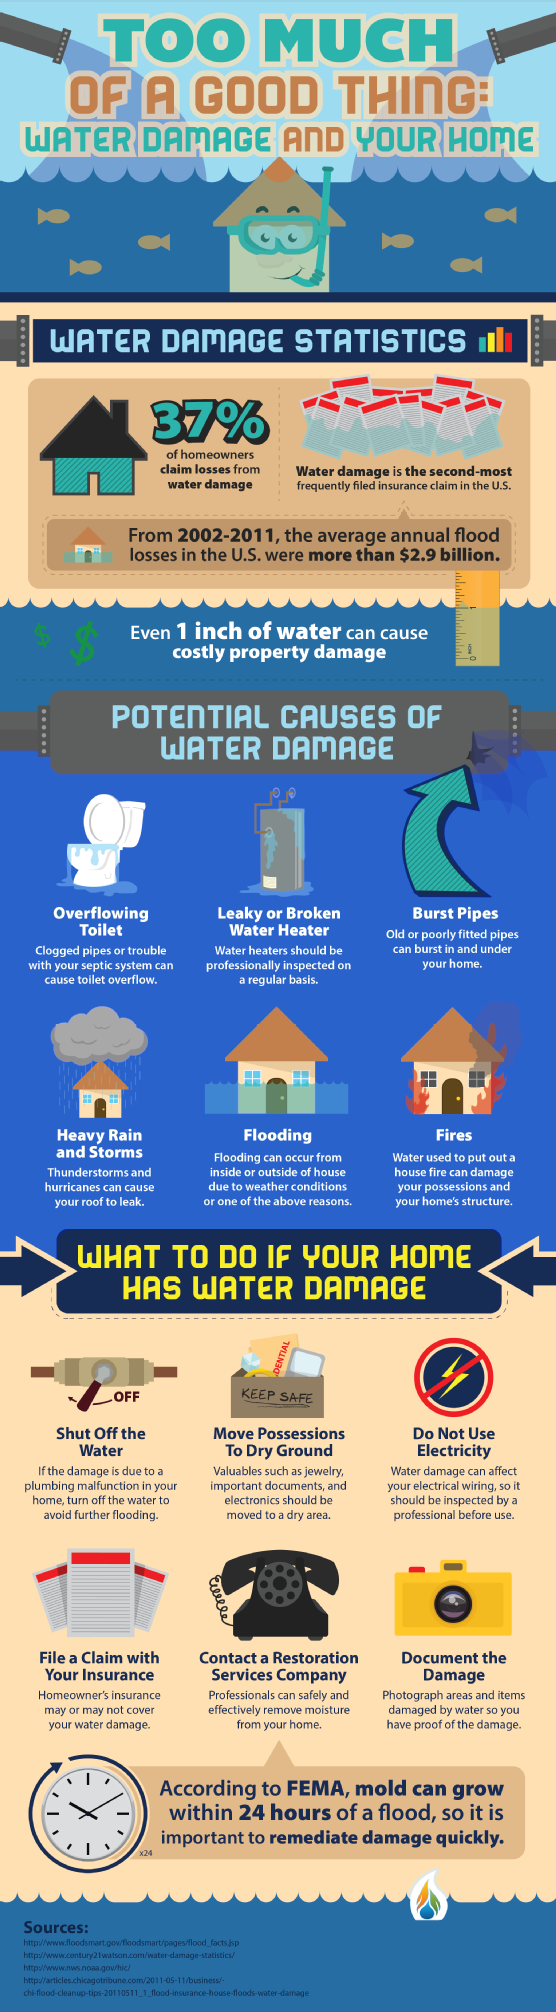 Water Damage Restoration and Repair Tips | Water Damage 411